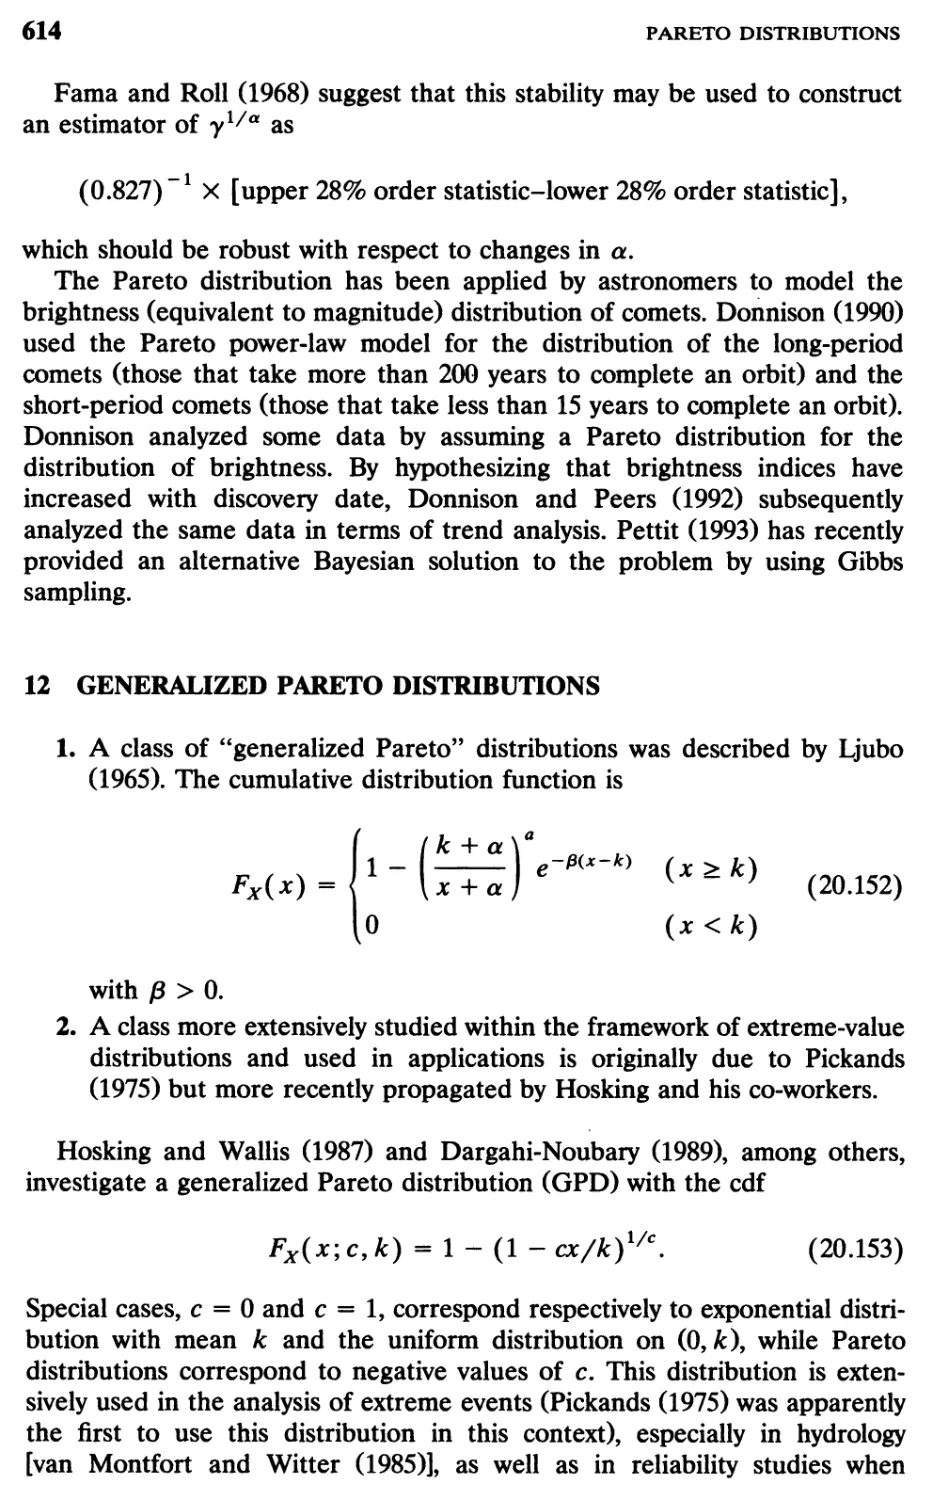 12 Generalized Pareto Distributions, 614